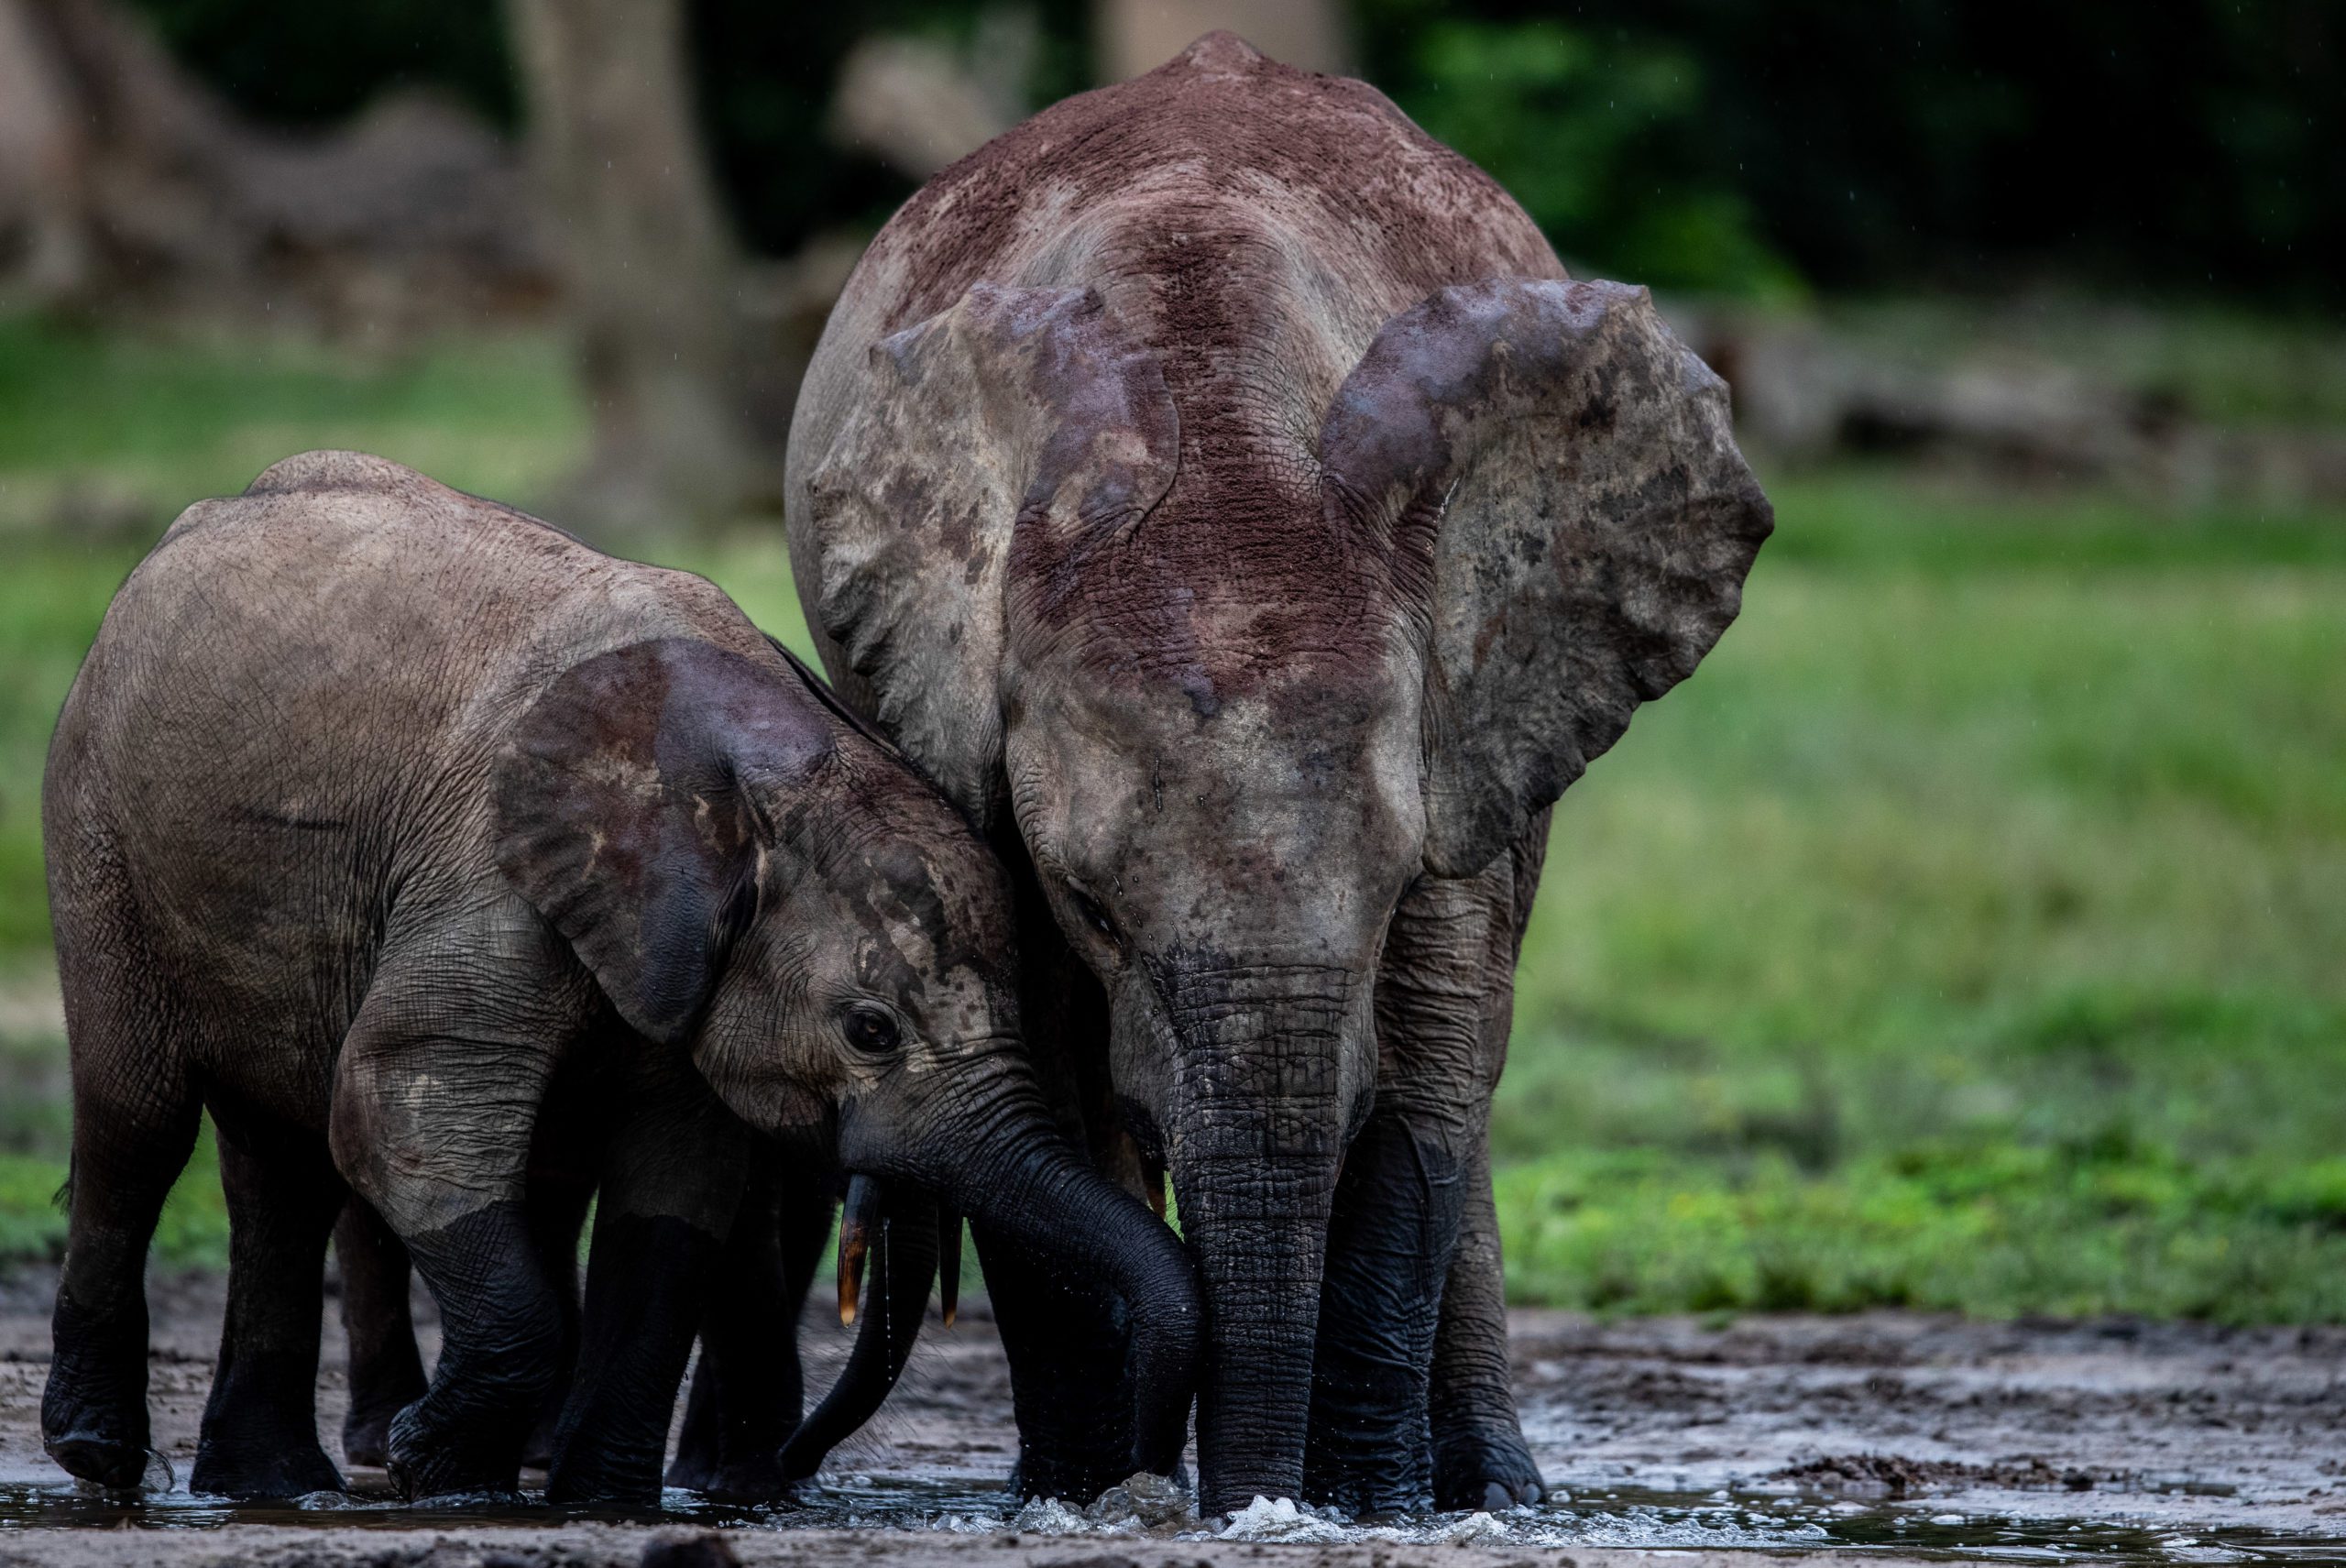 Sangha Lodge Congo Odzala two elephants in river seen on Congo Basin safari